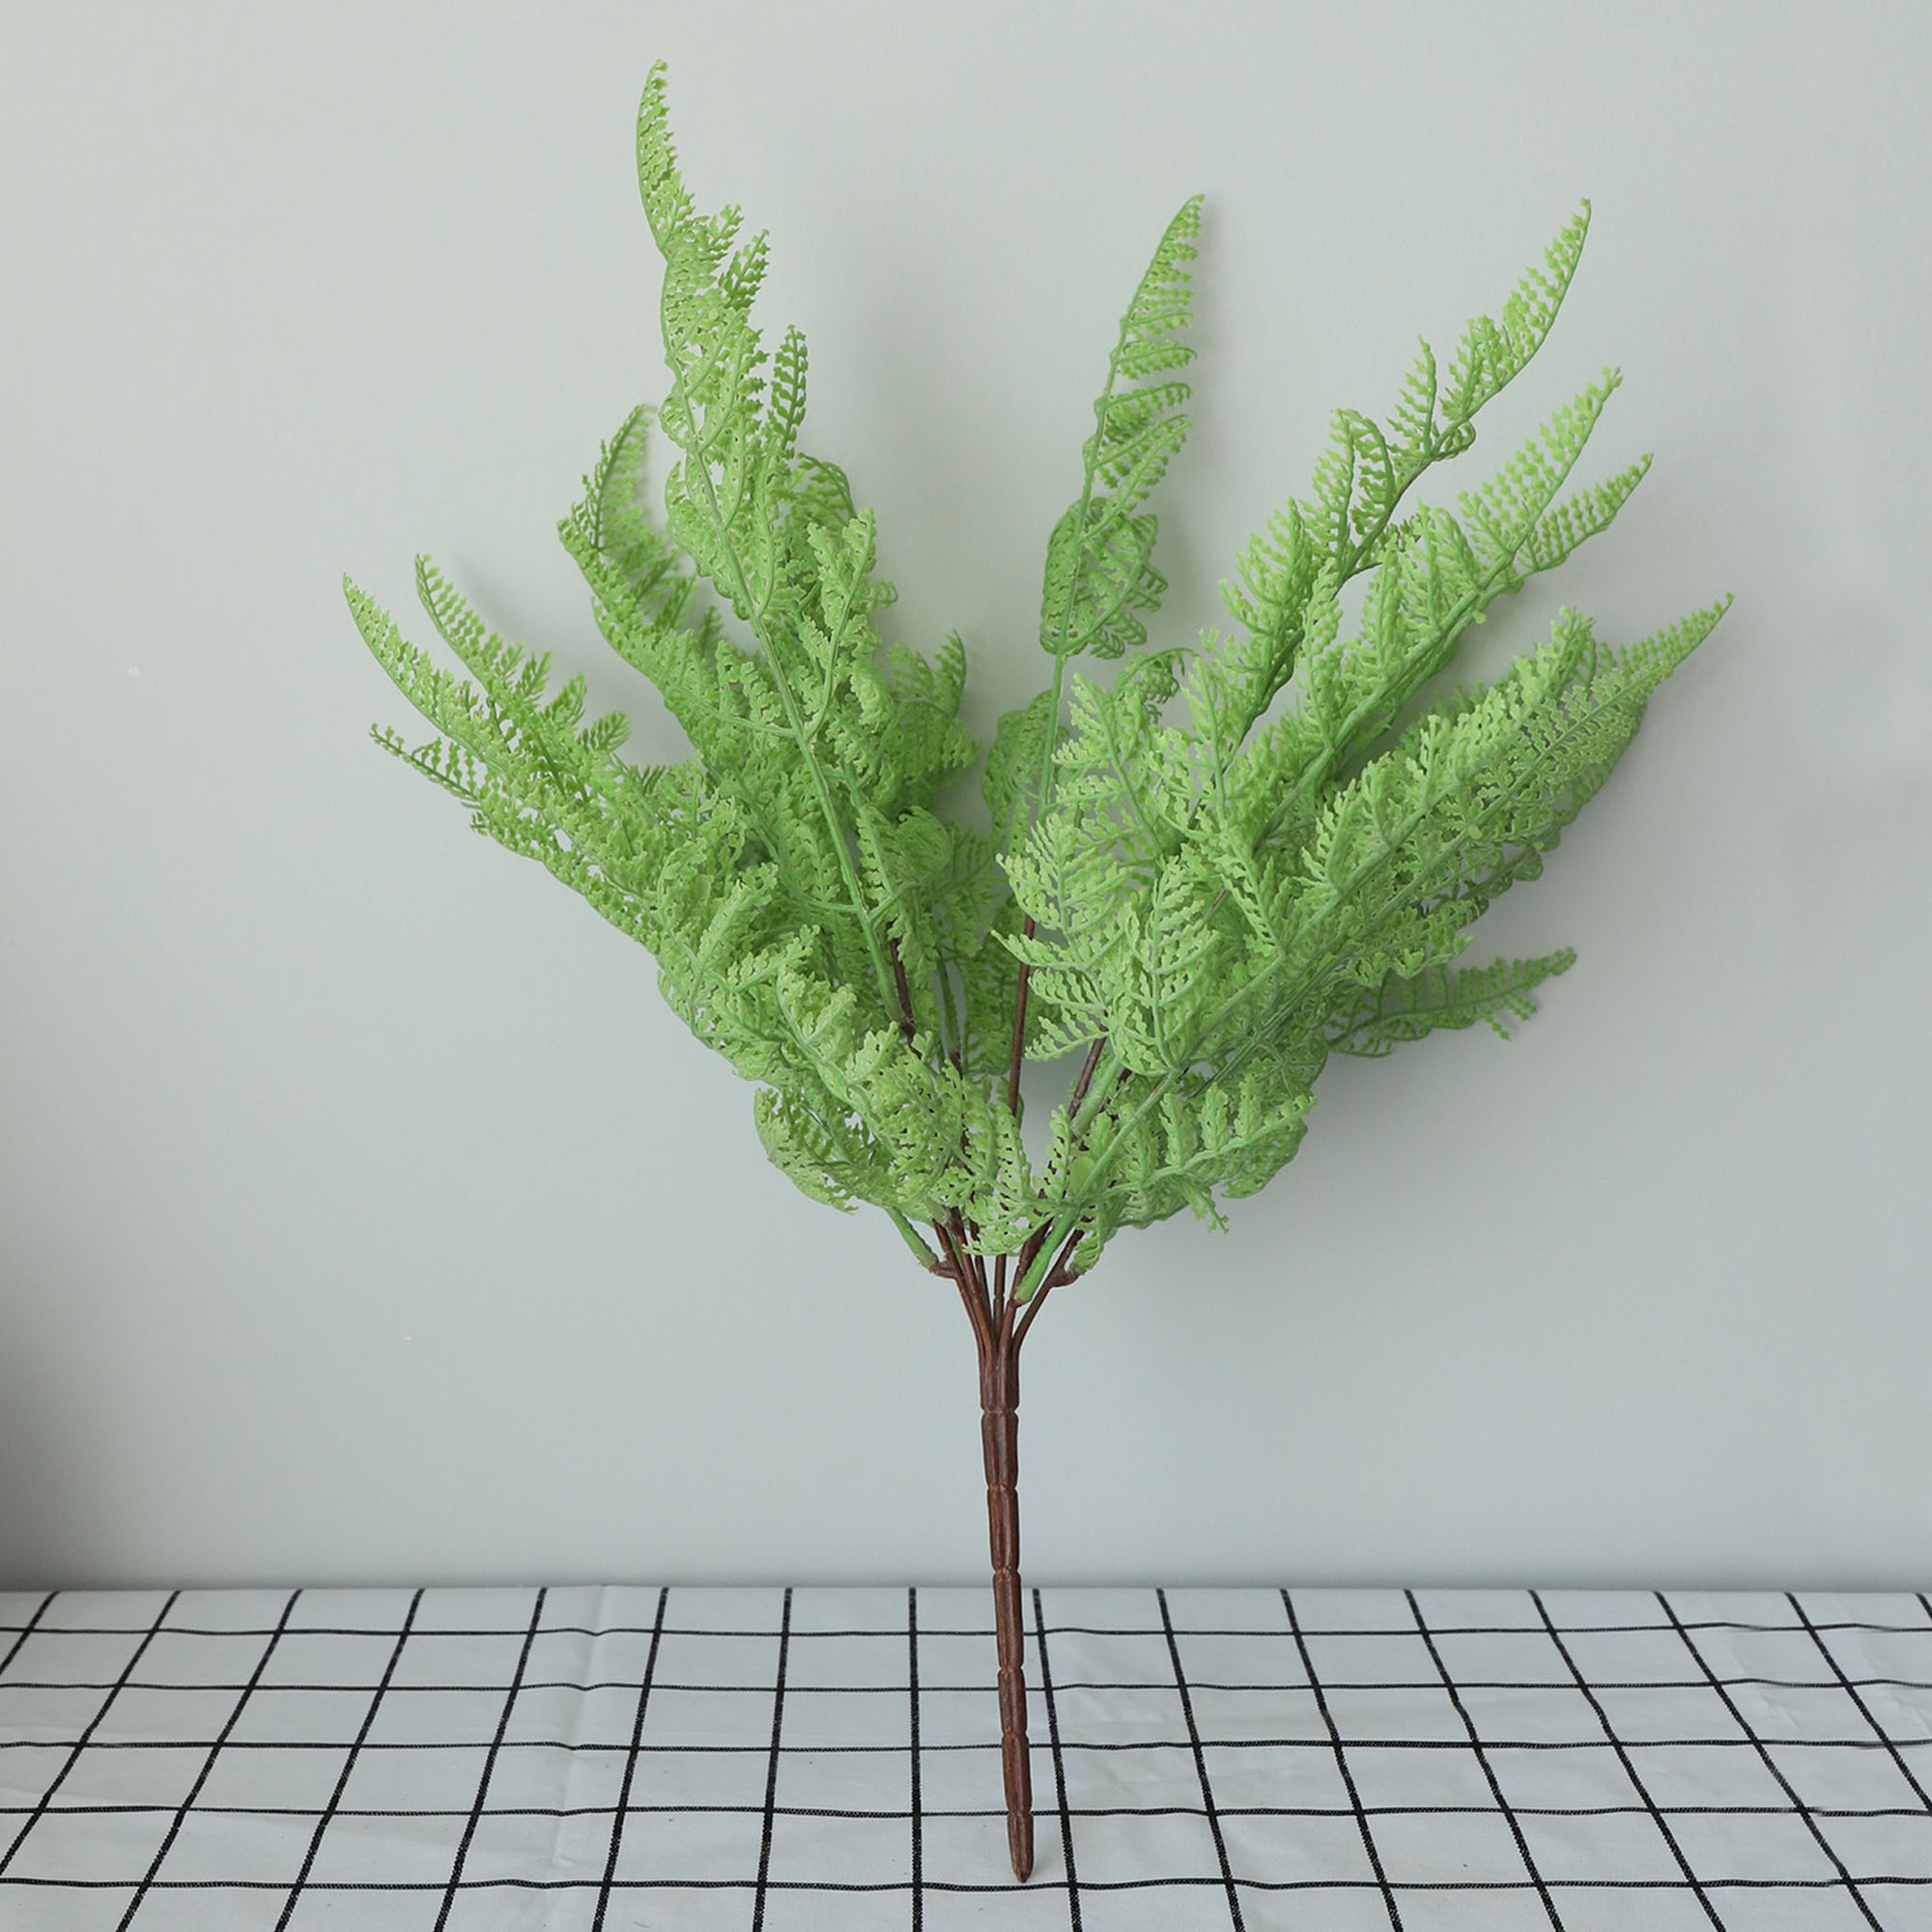 Fake Fern Bush Artificial Greenery Plants for Home Decor